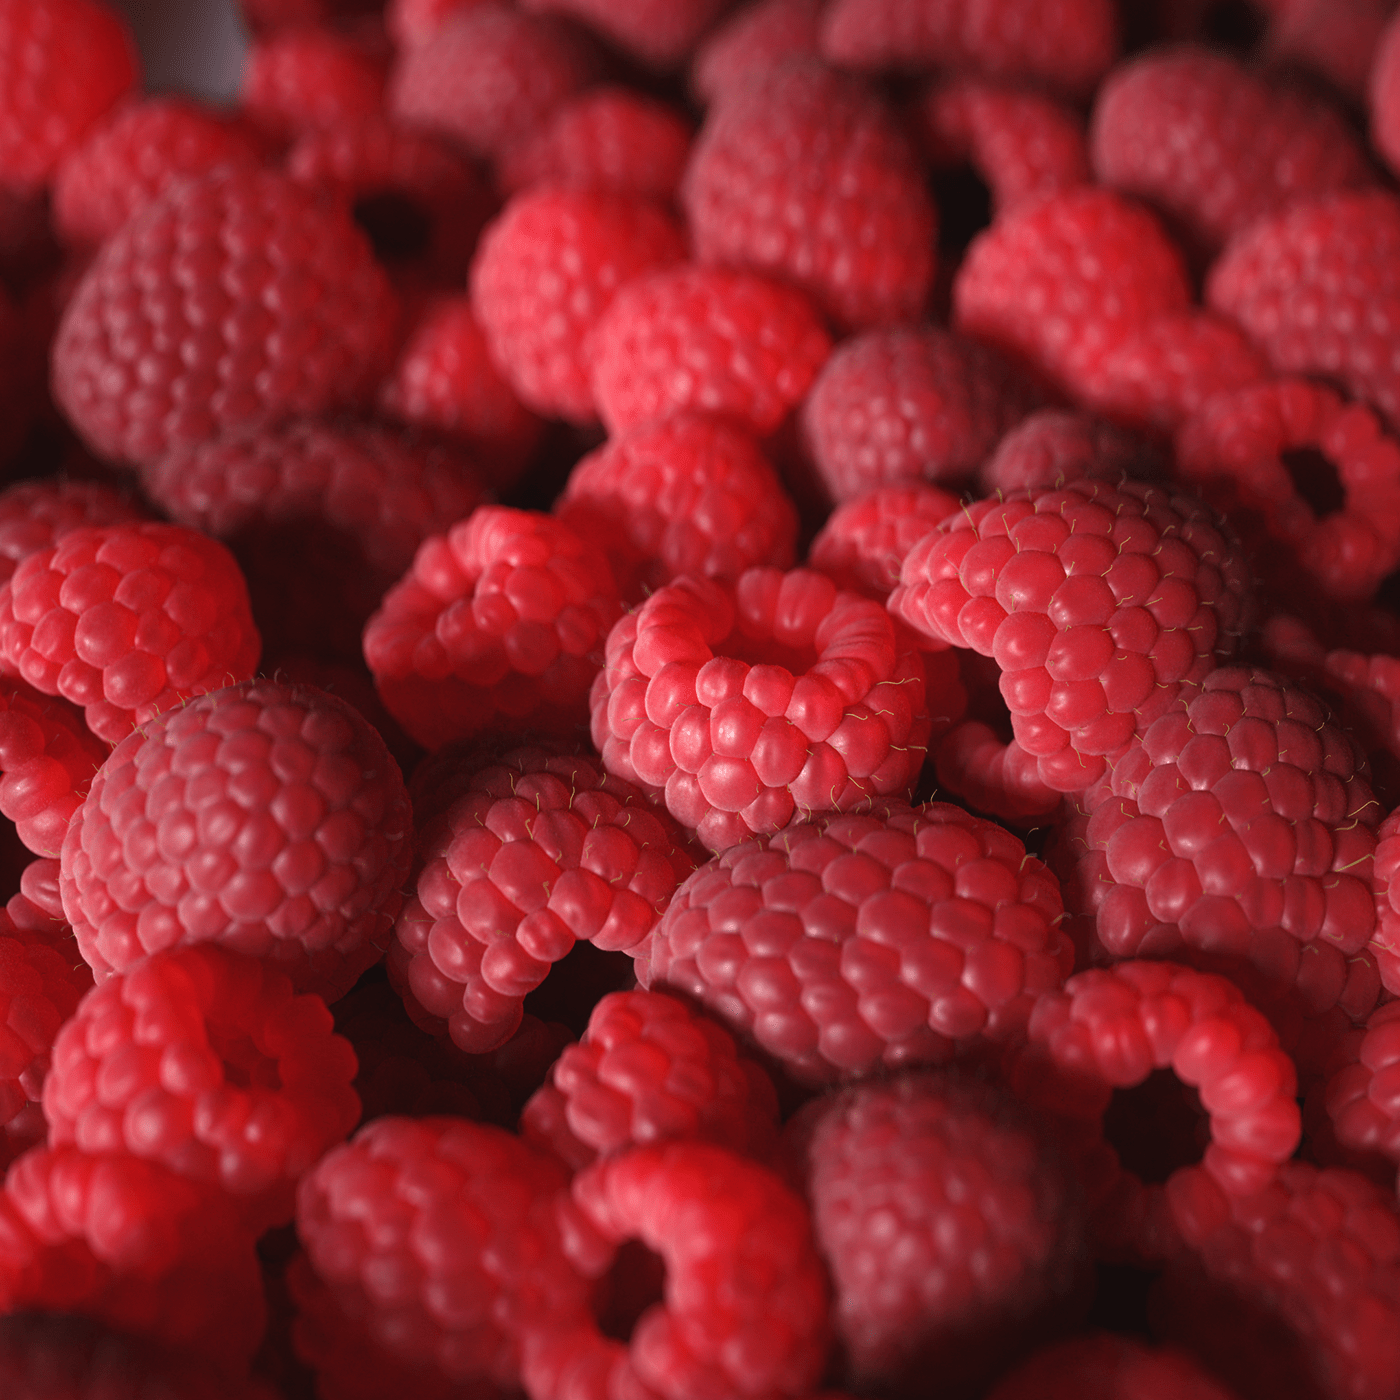 3D c4d CGI cinema 4d Fruit fruits octane raspberries Render visualization